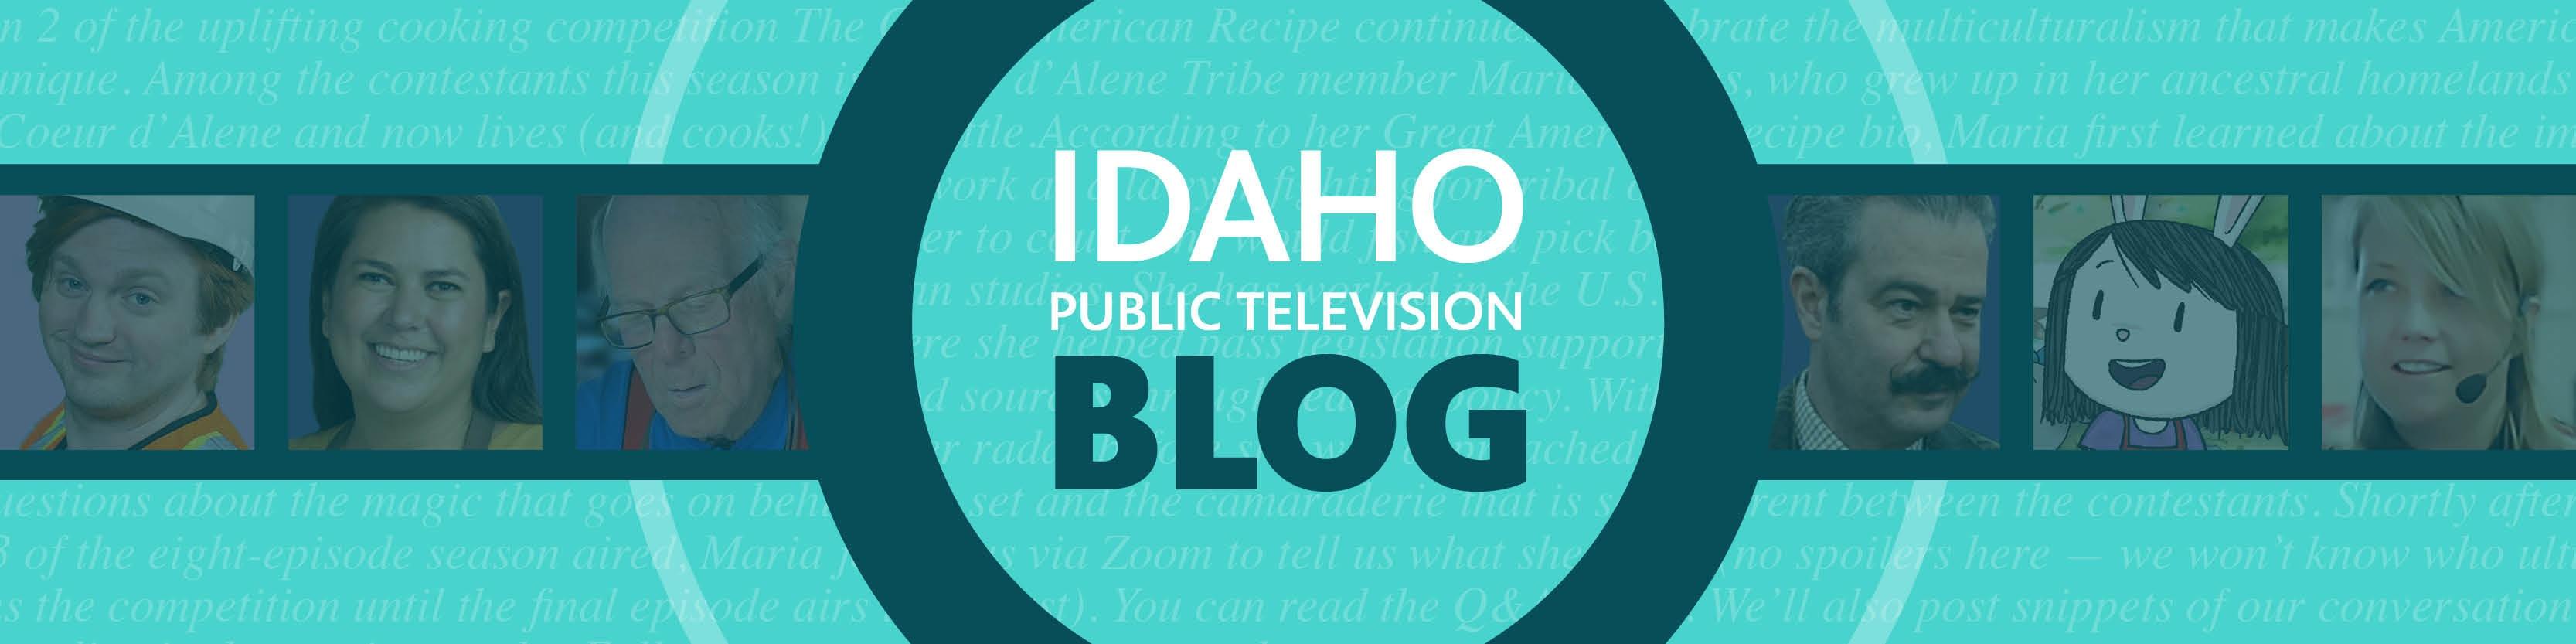 Idaho Public Television Blog